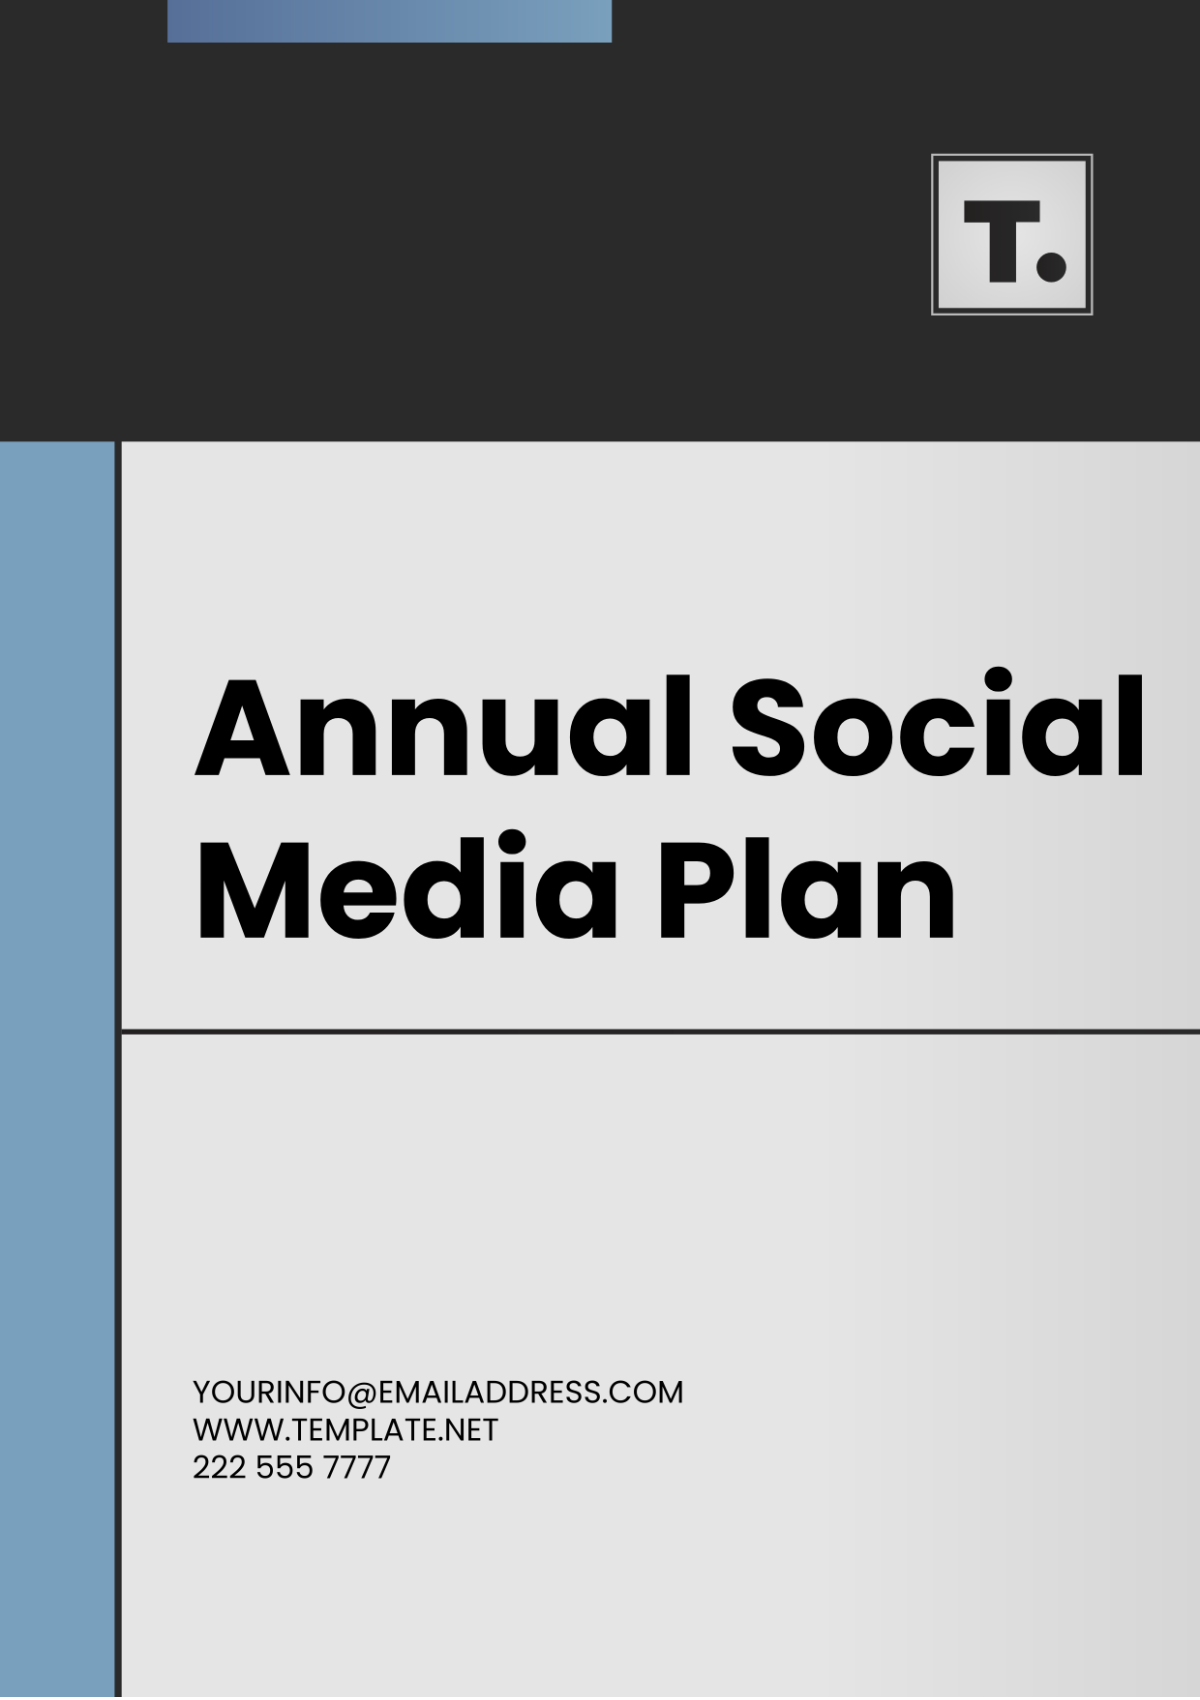 Annual Social Media Plan Template